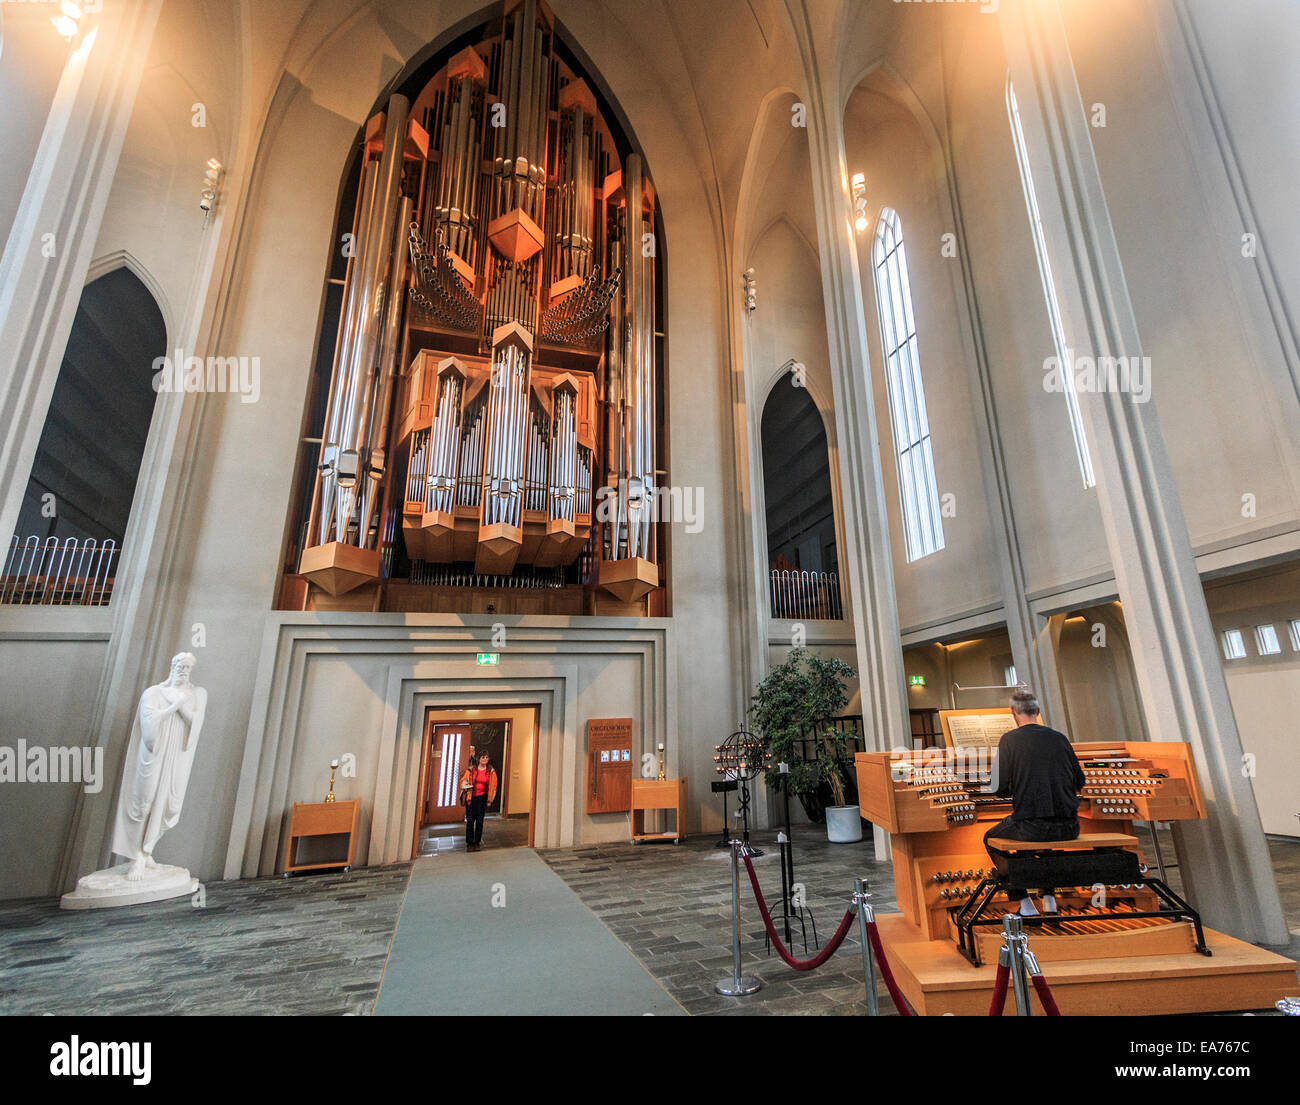 Inside Hallgrímskirkja, an iconic landmark Lutheran parish church in Reykjavík, Iceland Stock Photo